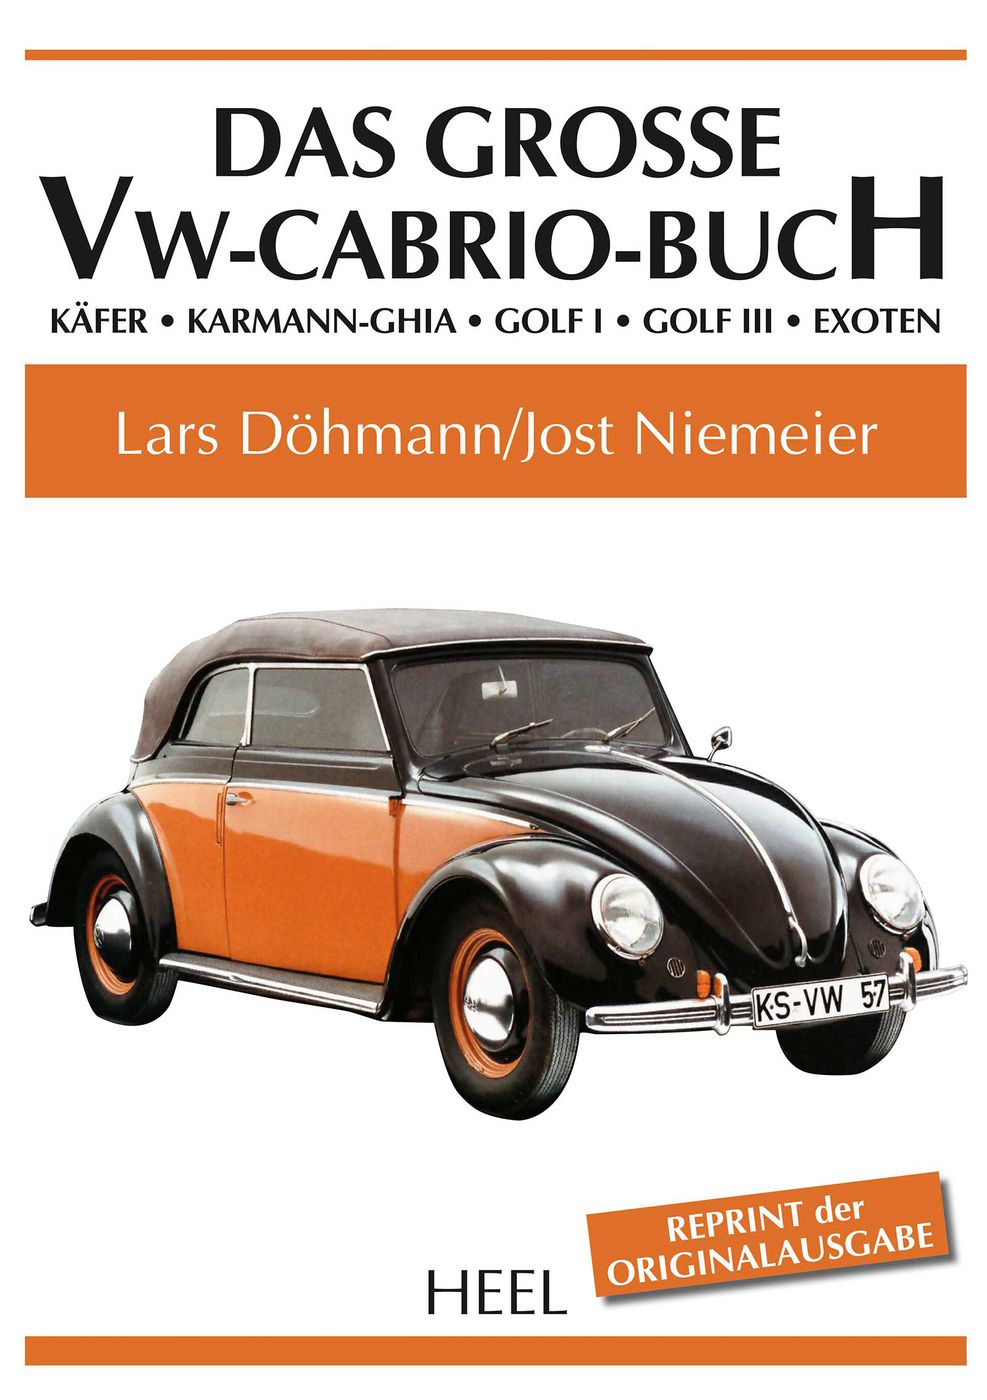 Das große VW-Cabrio-Buch
Das große VW-Cabrio-Buch
Das große V